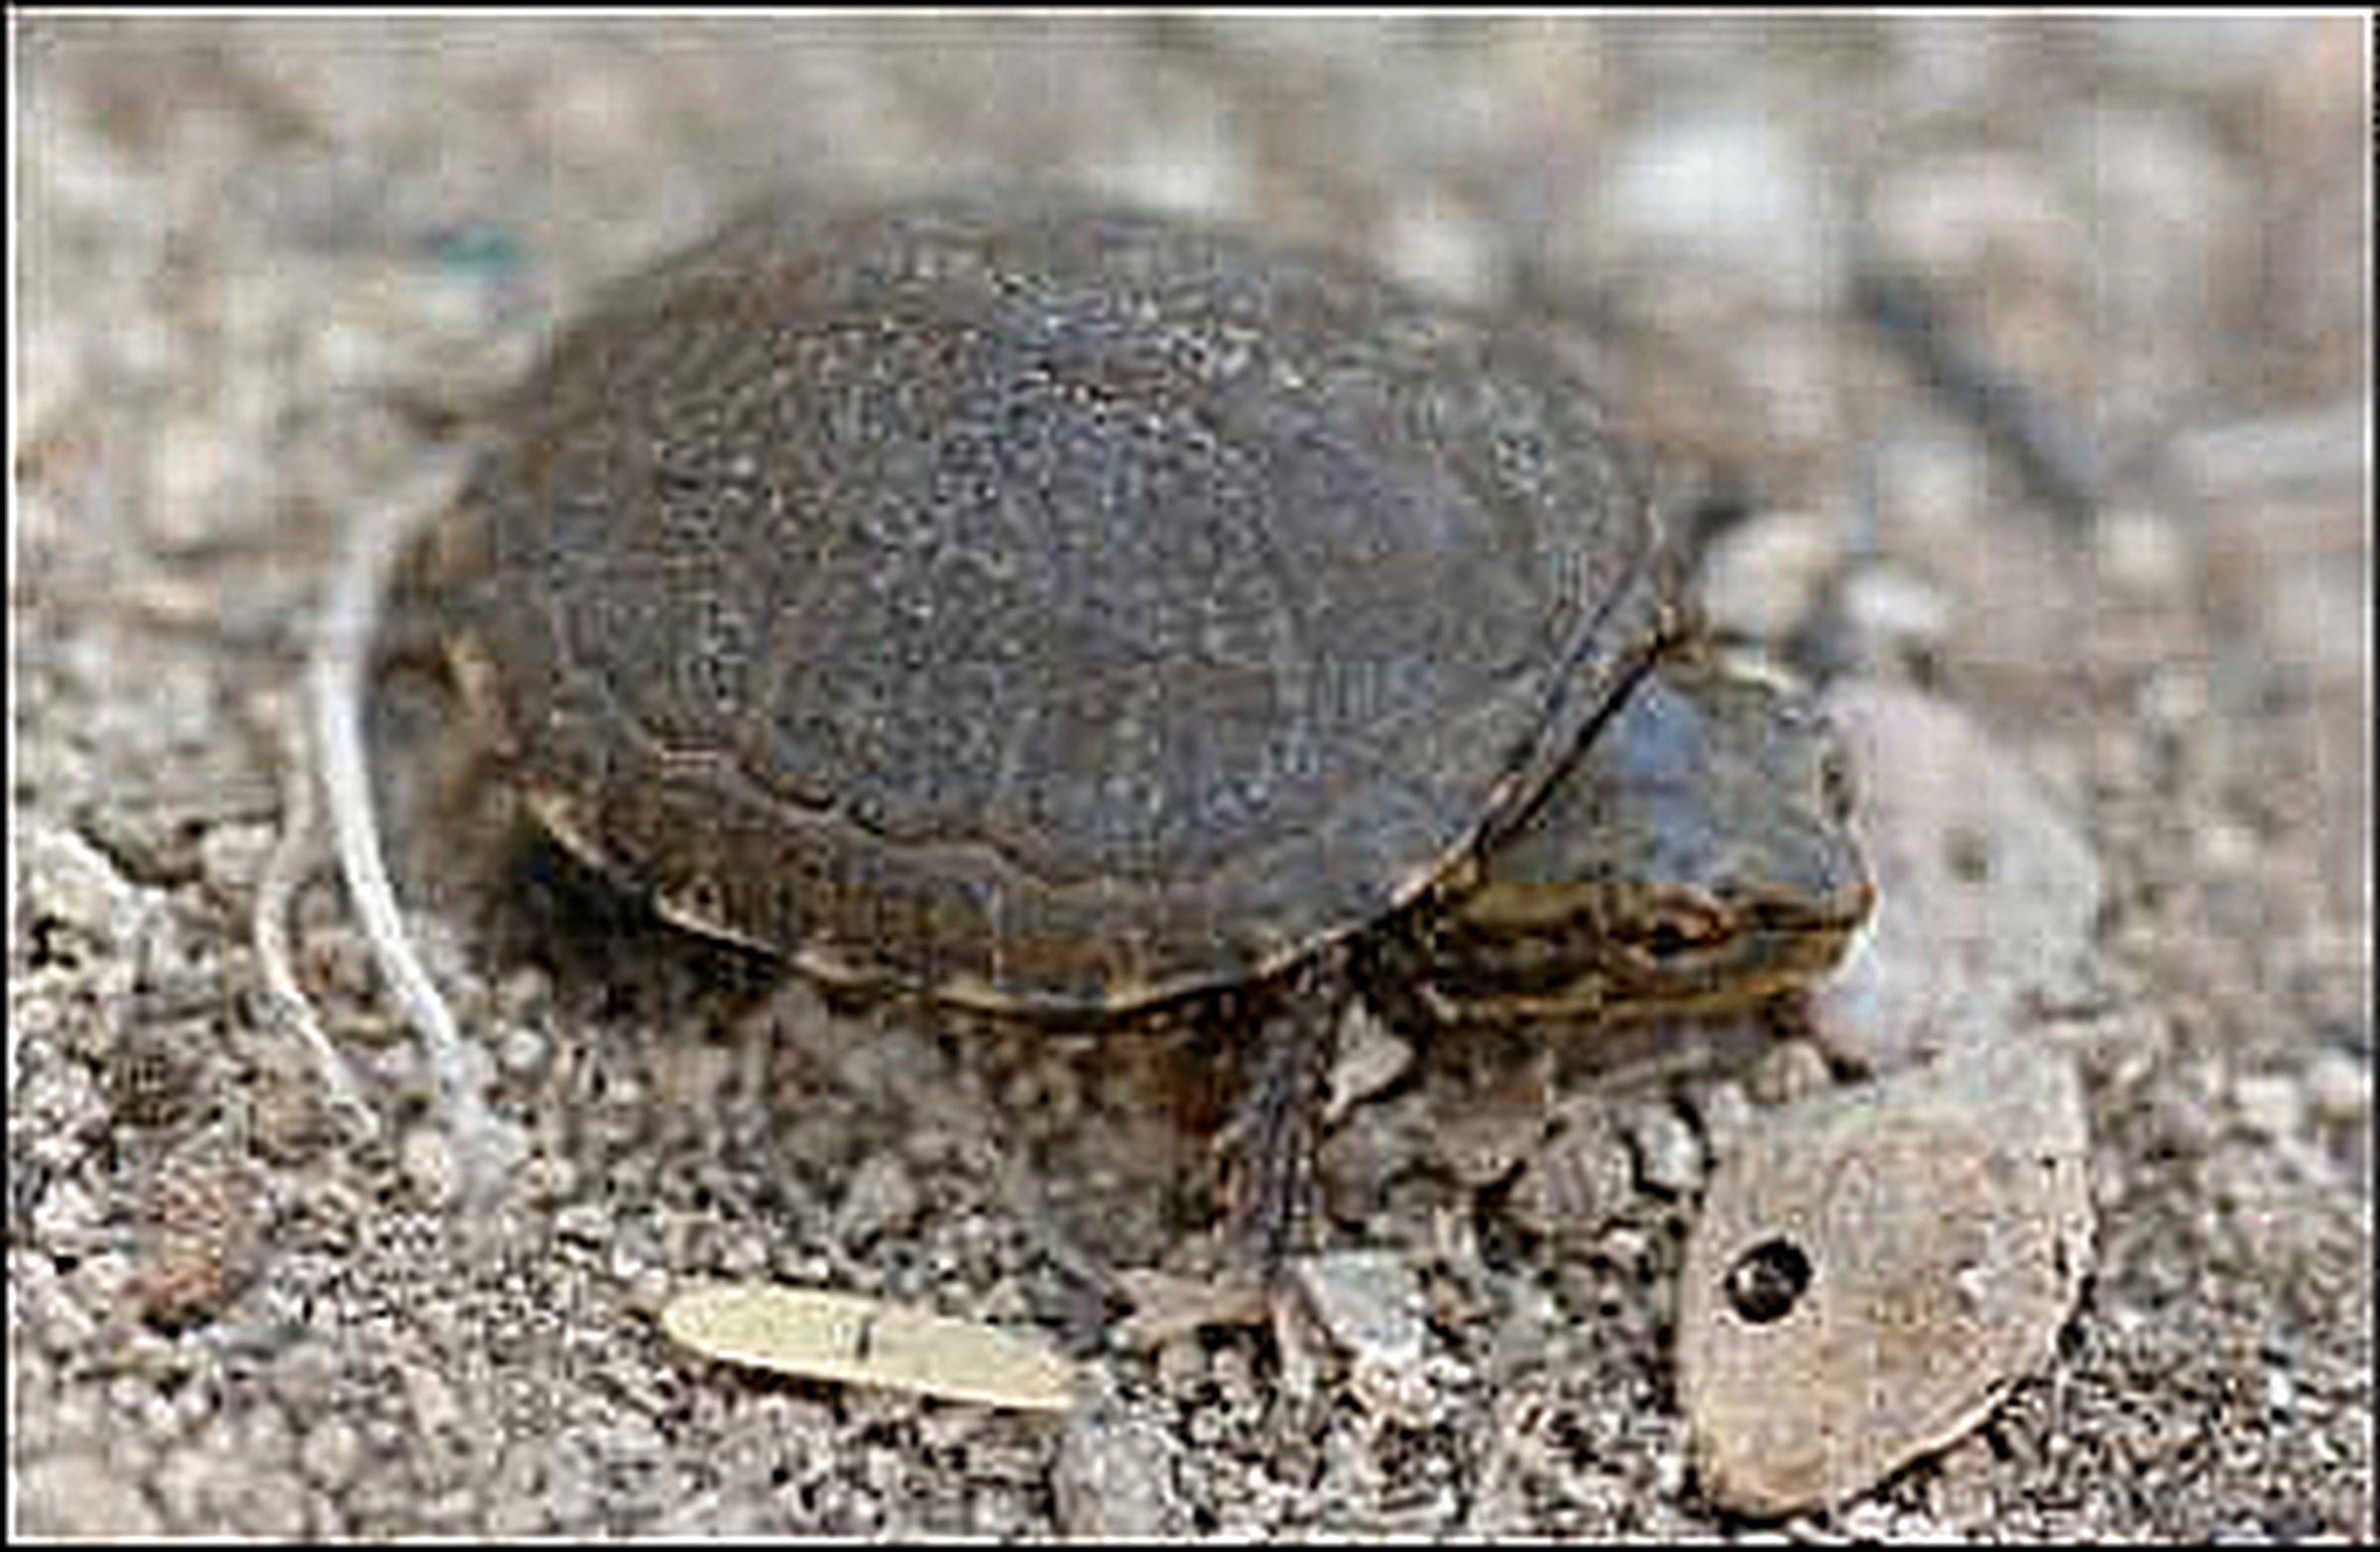 The Sonoyta mud turtle.